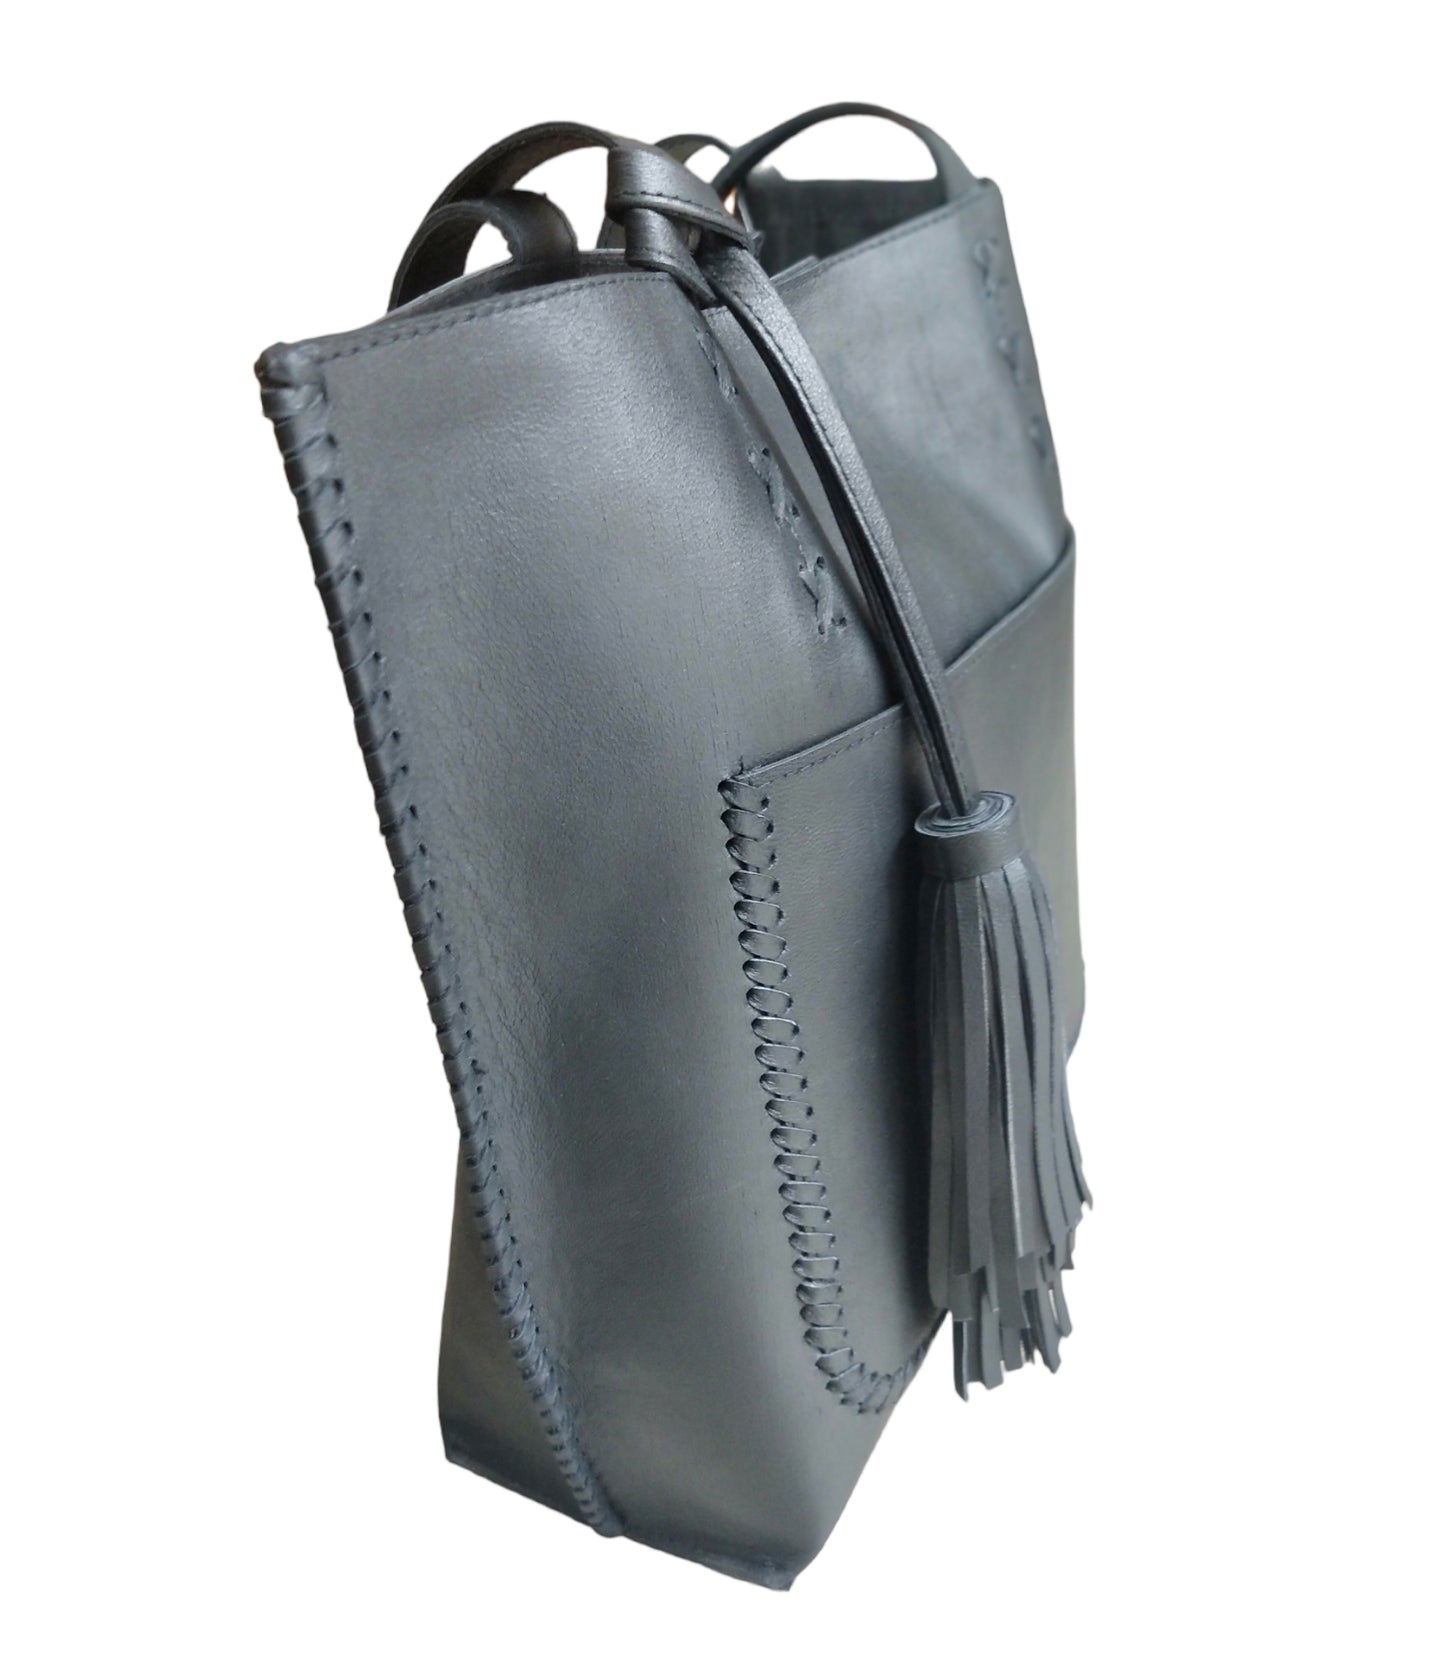 Misty Leather Bag